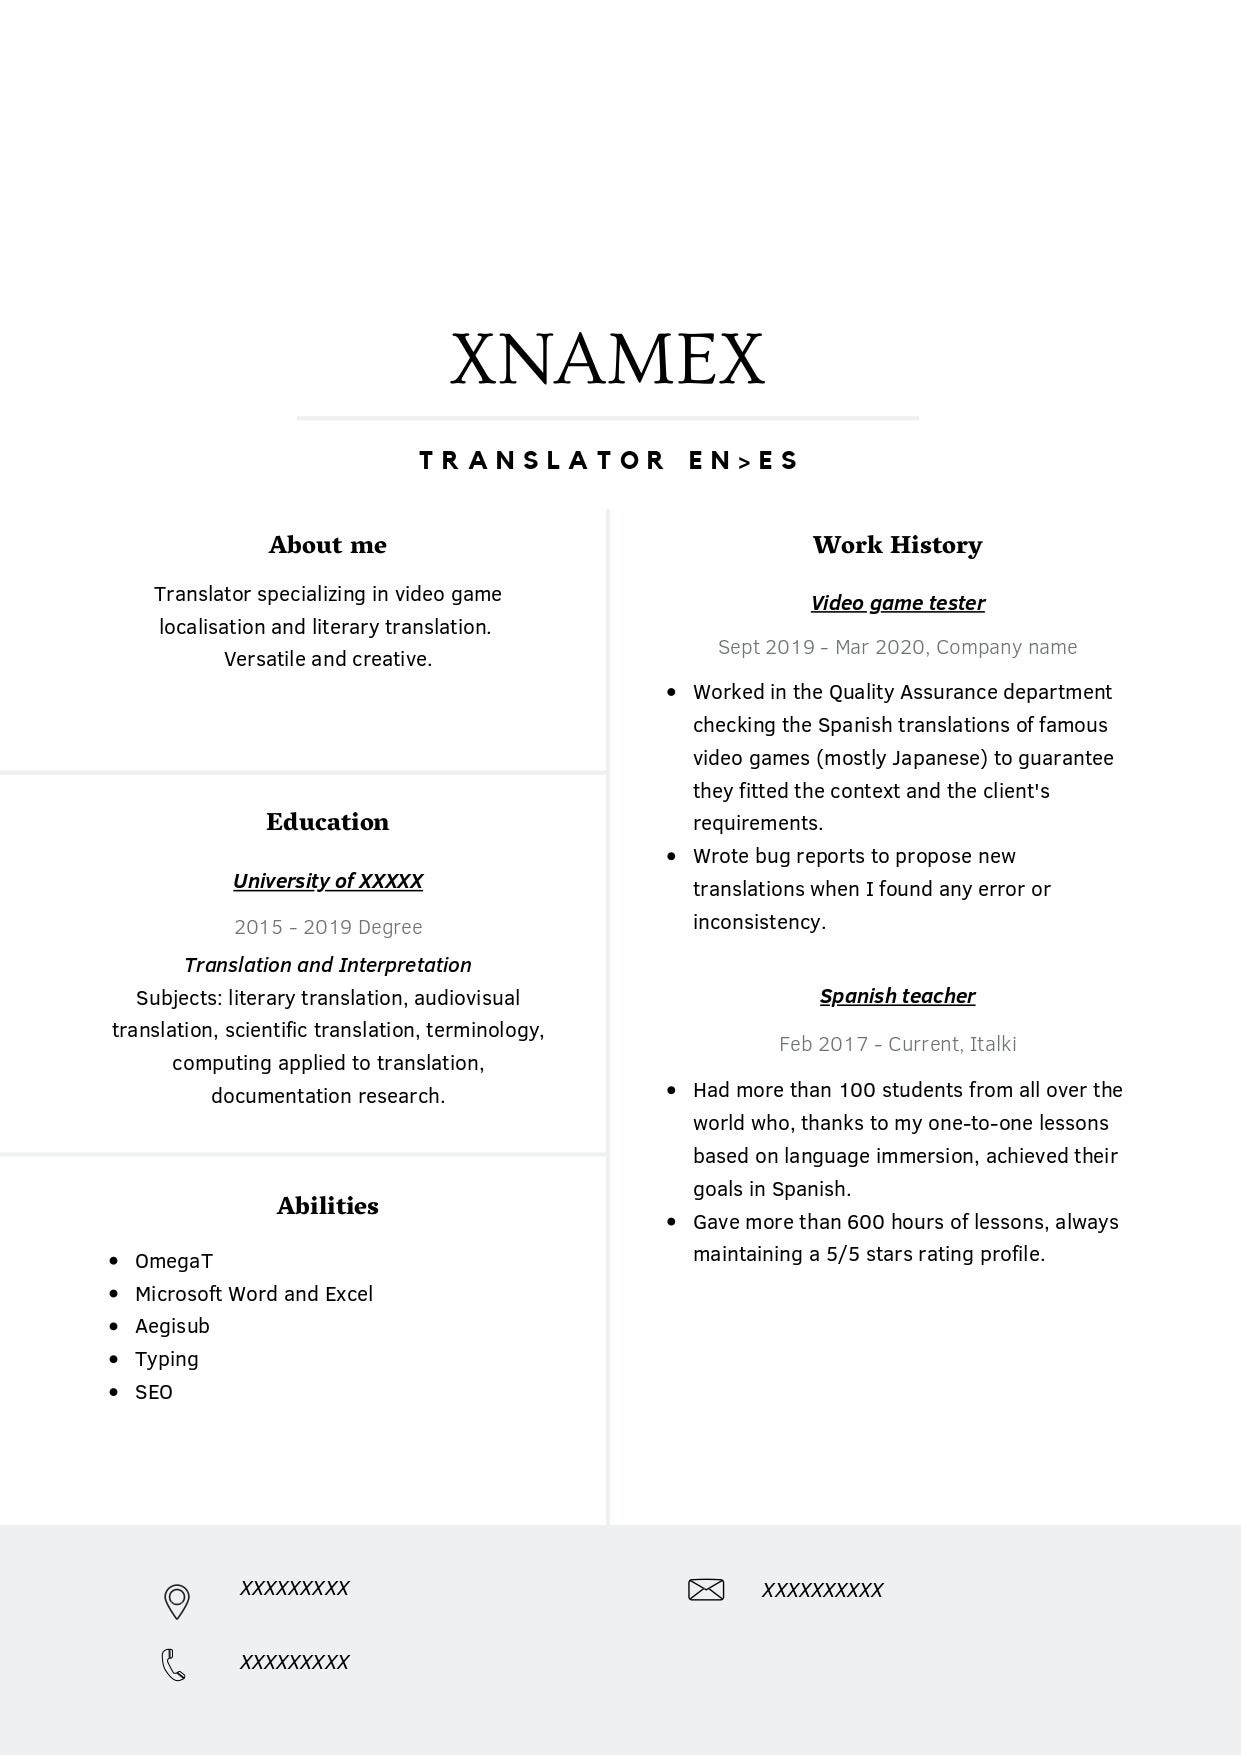 Sample Resume for A Video Game Translator Do You Think This is A Good Beginner Translator Cv? : R …